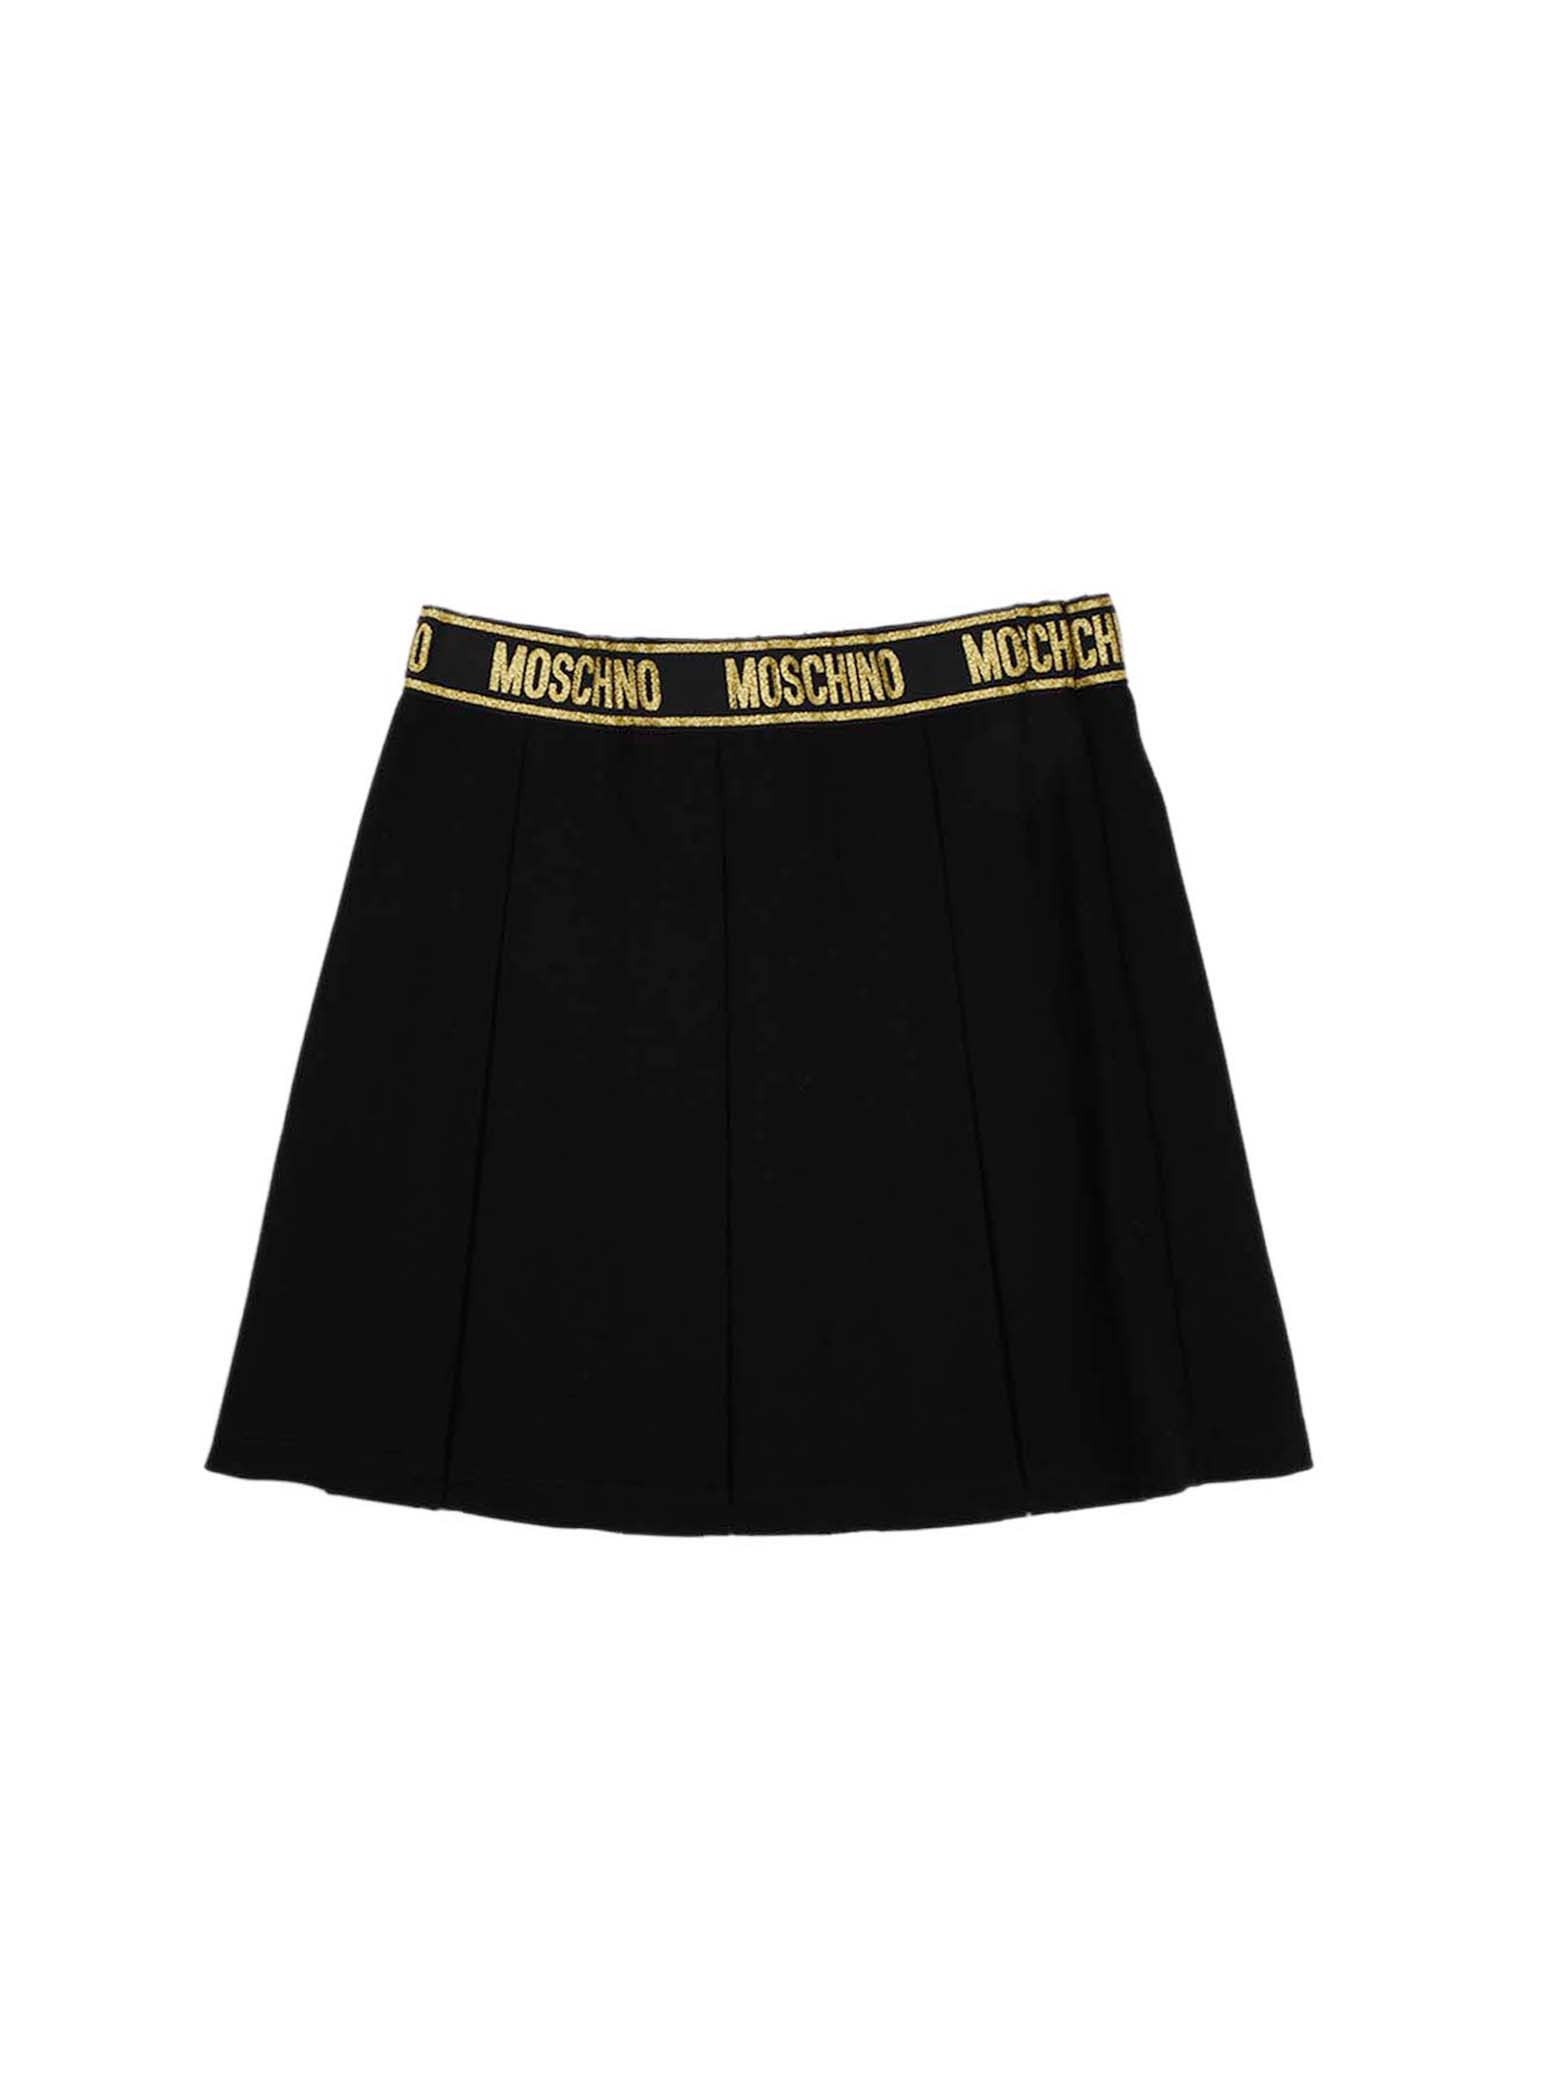 Moschino Black Skirt With Gold Logo Elastic